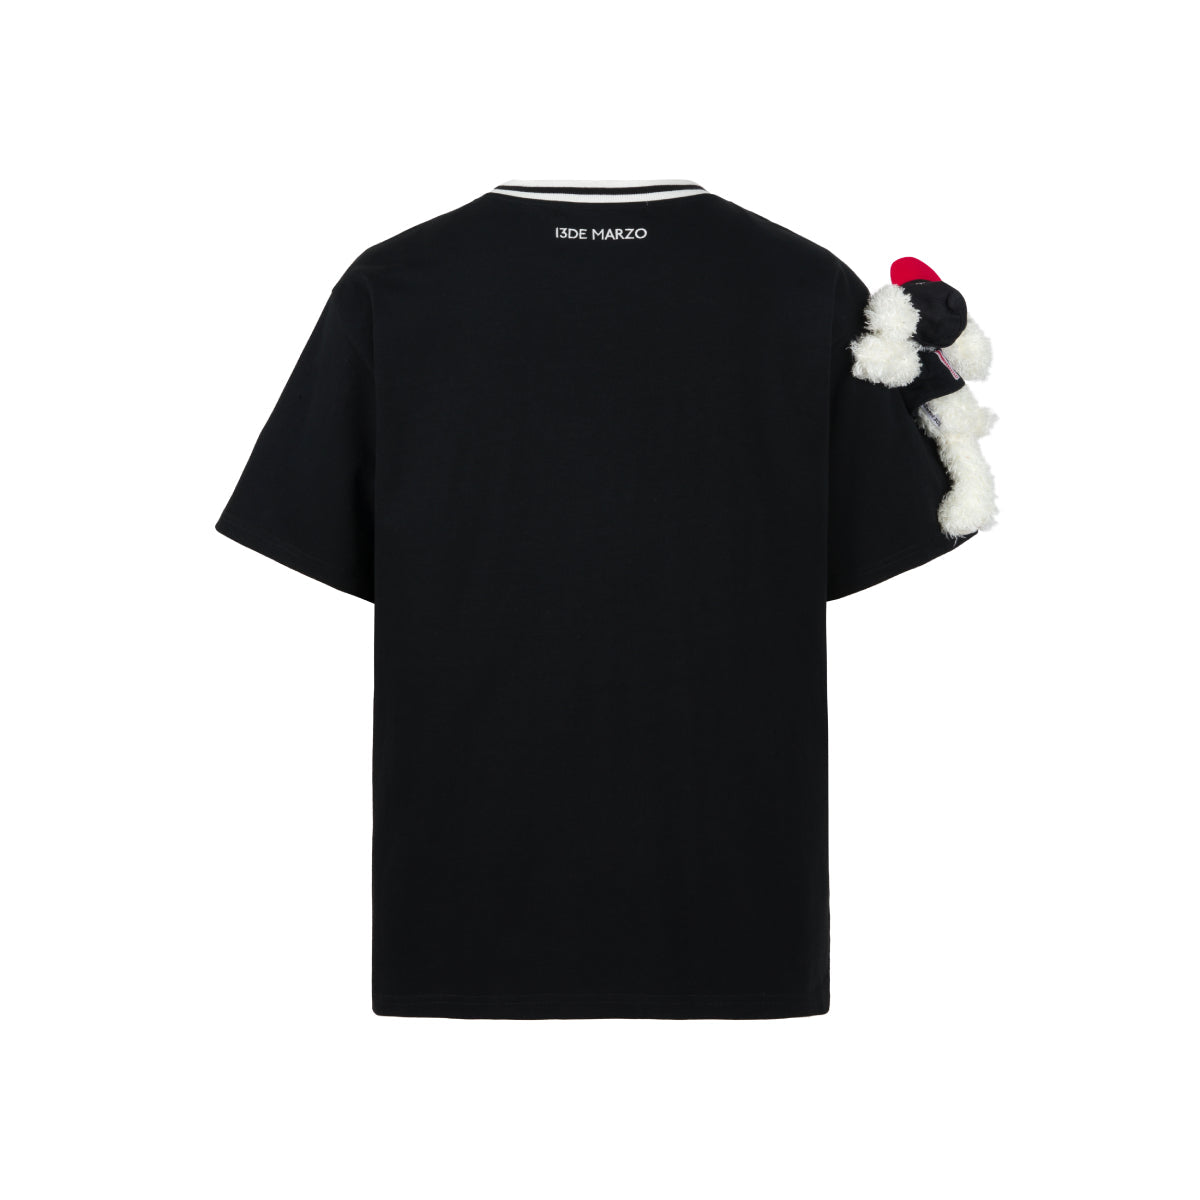 13De Marzo Badge Knit Collar T-Shirt Black